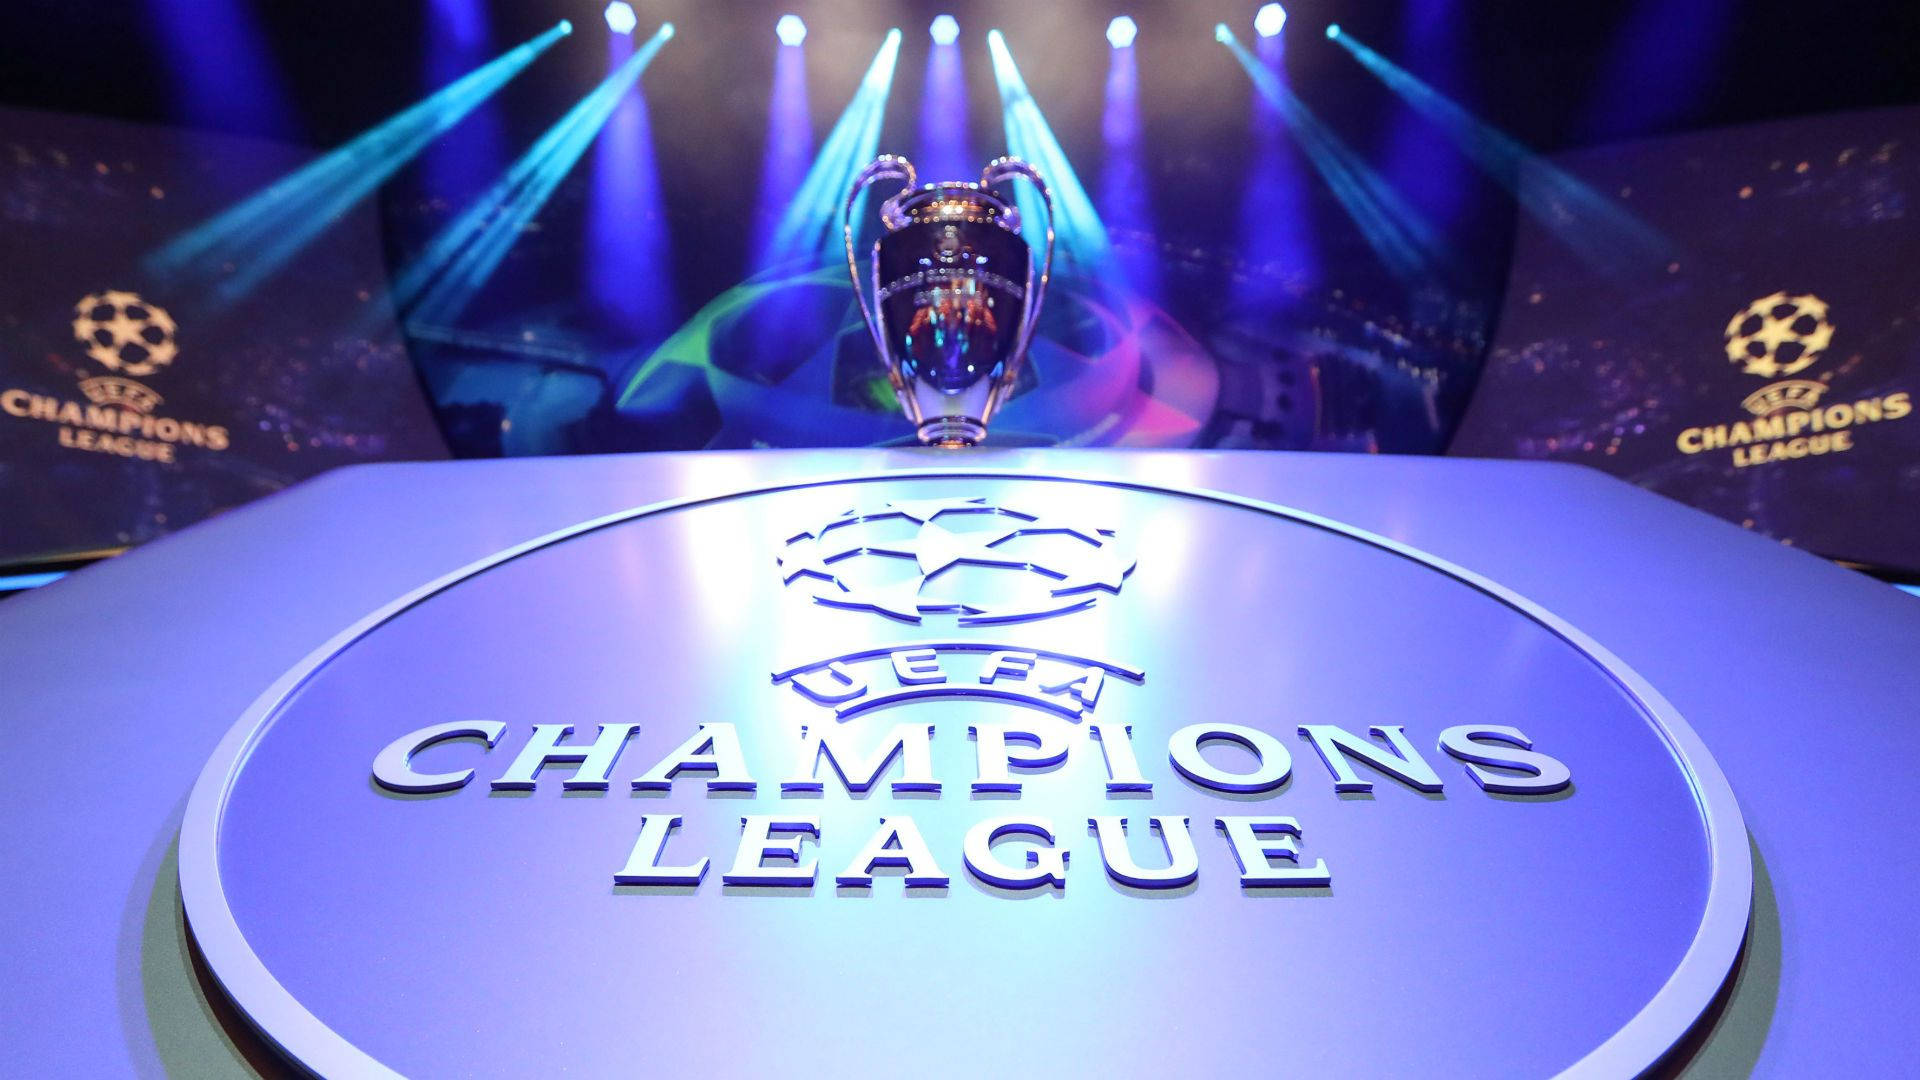 Uefa Champions League 2020 Trophy Background